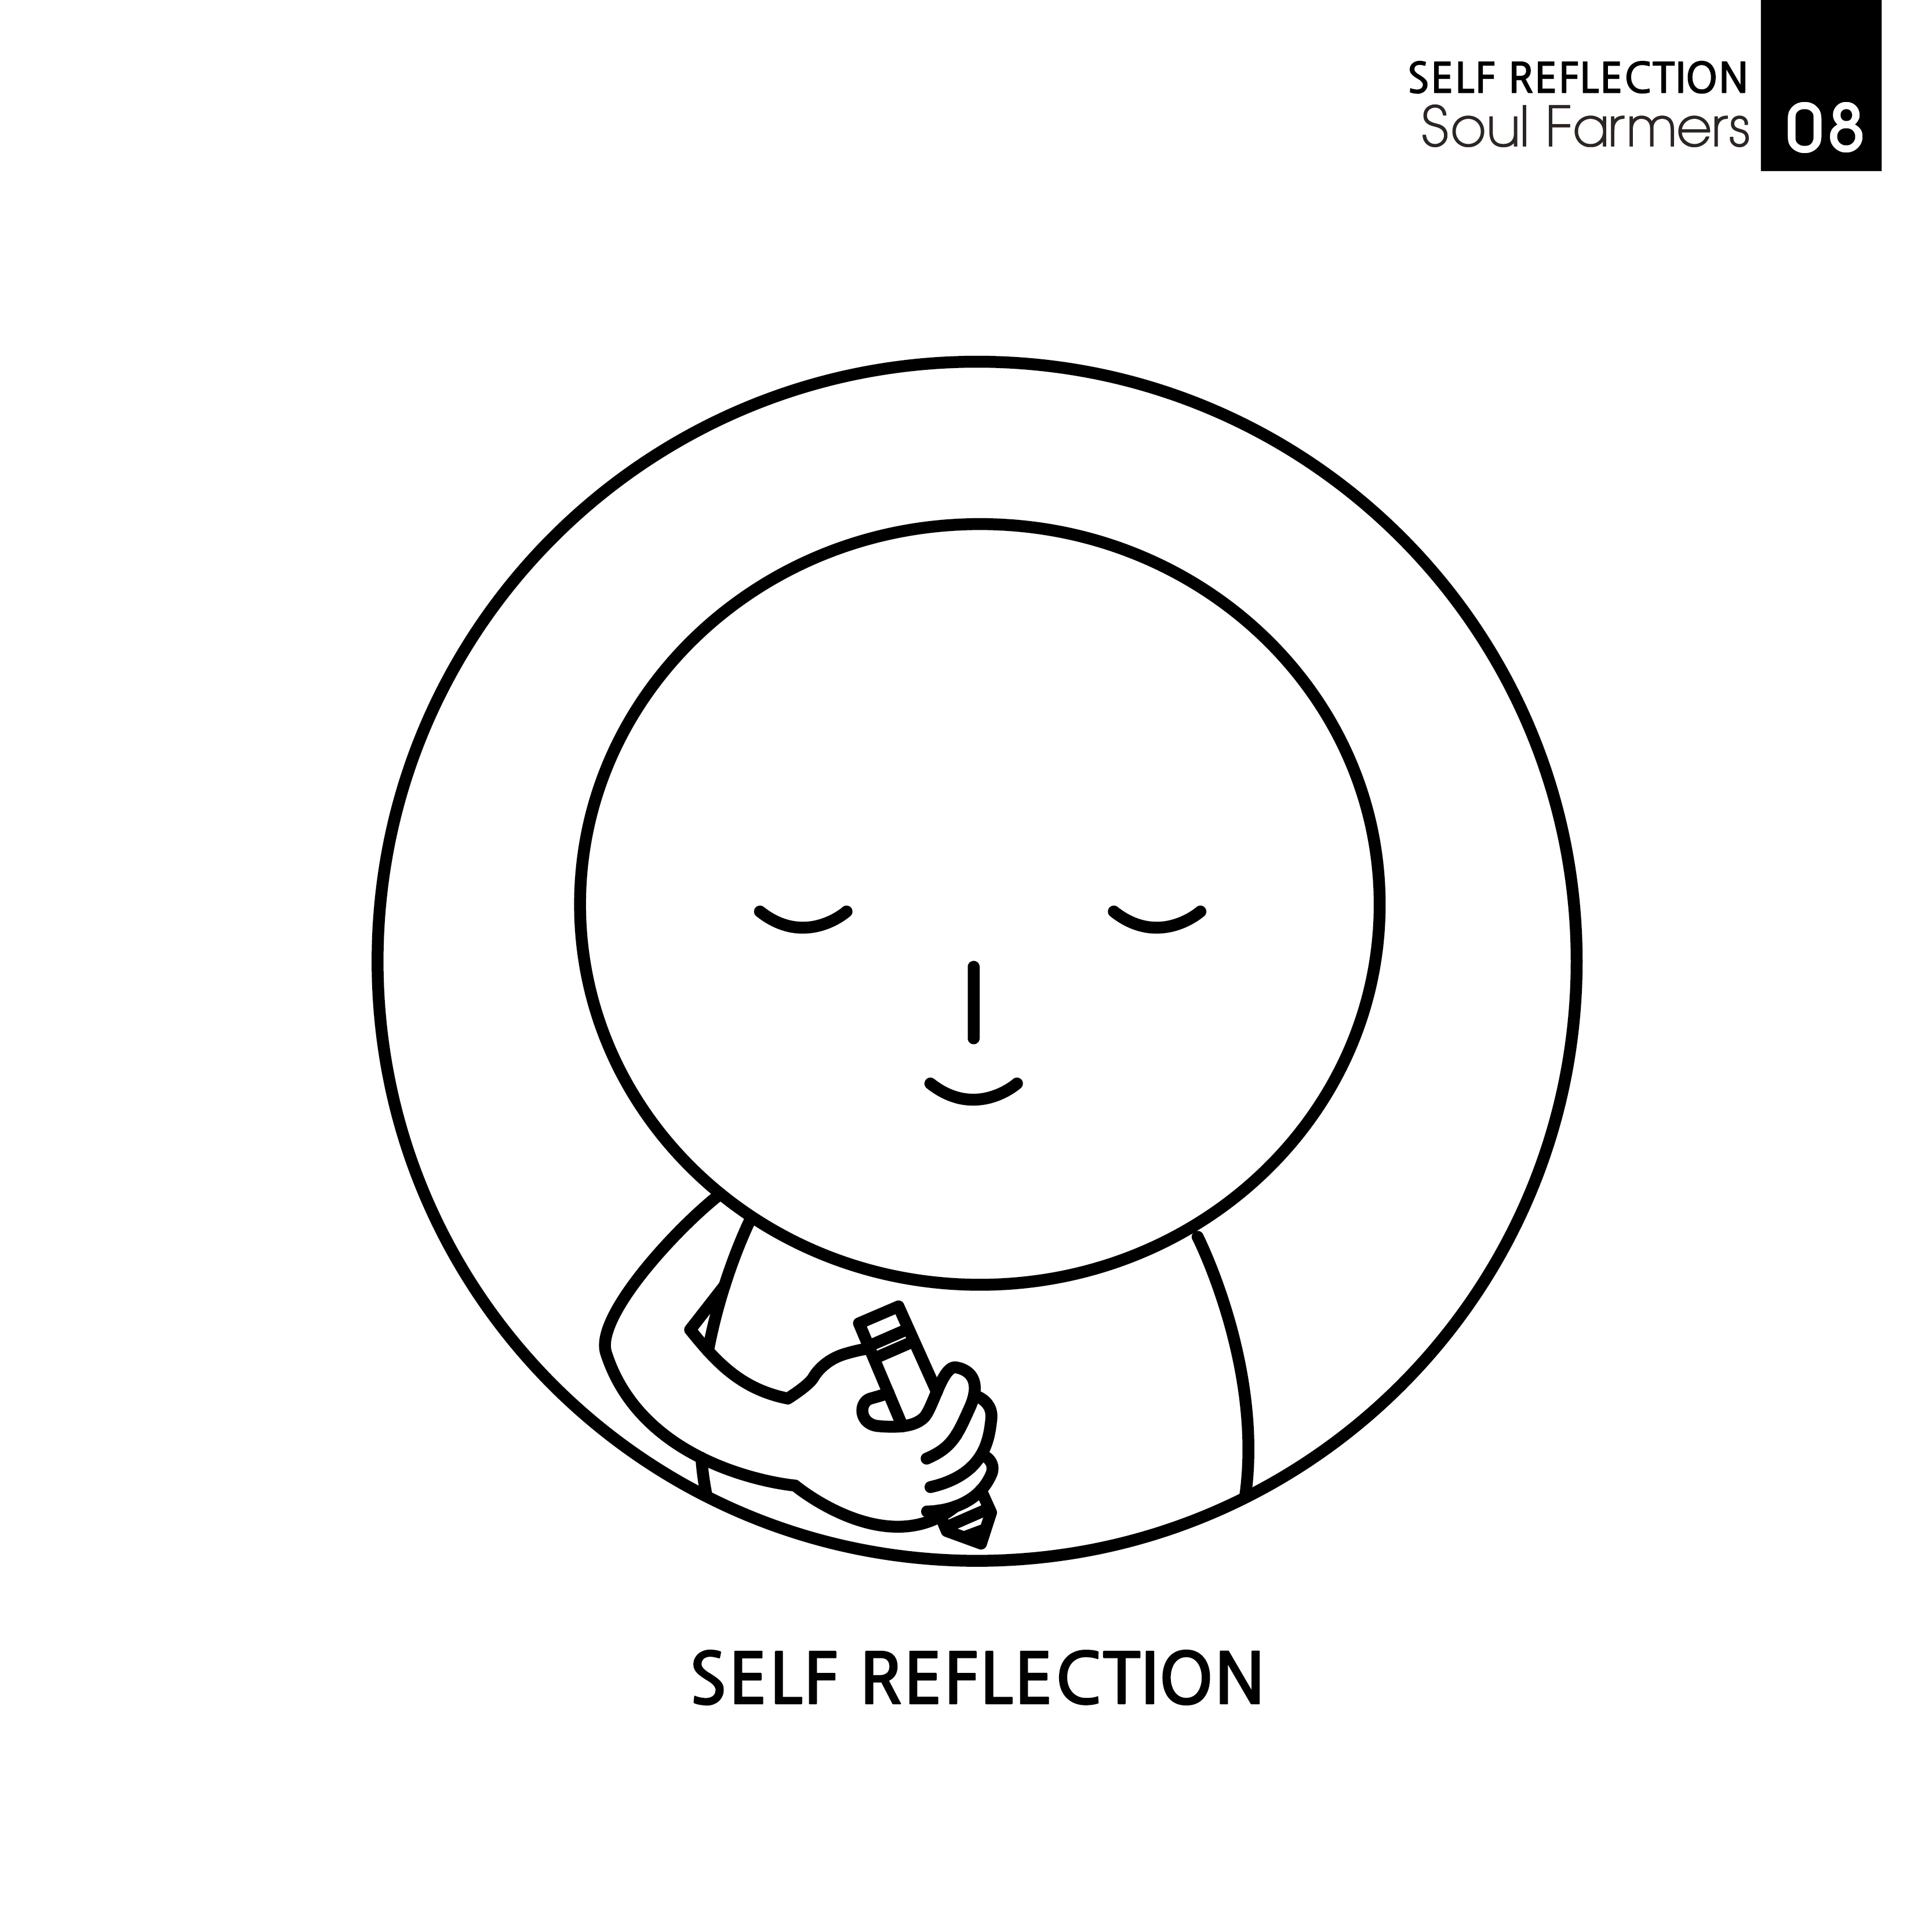 Teamcomm Self Reflection ìžê¸°ì„±ì°° Time 15min Person Item Paper By ì¡°ì•„ìœ¤ Medium